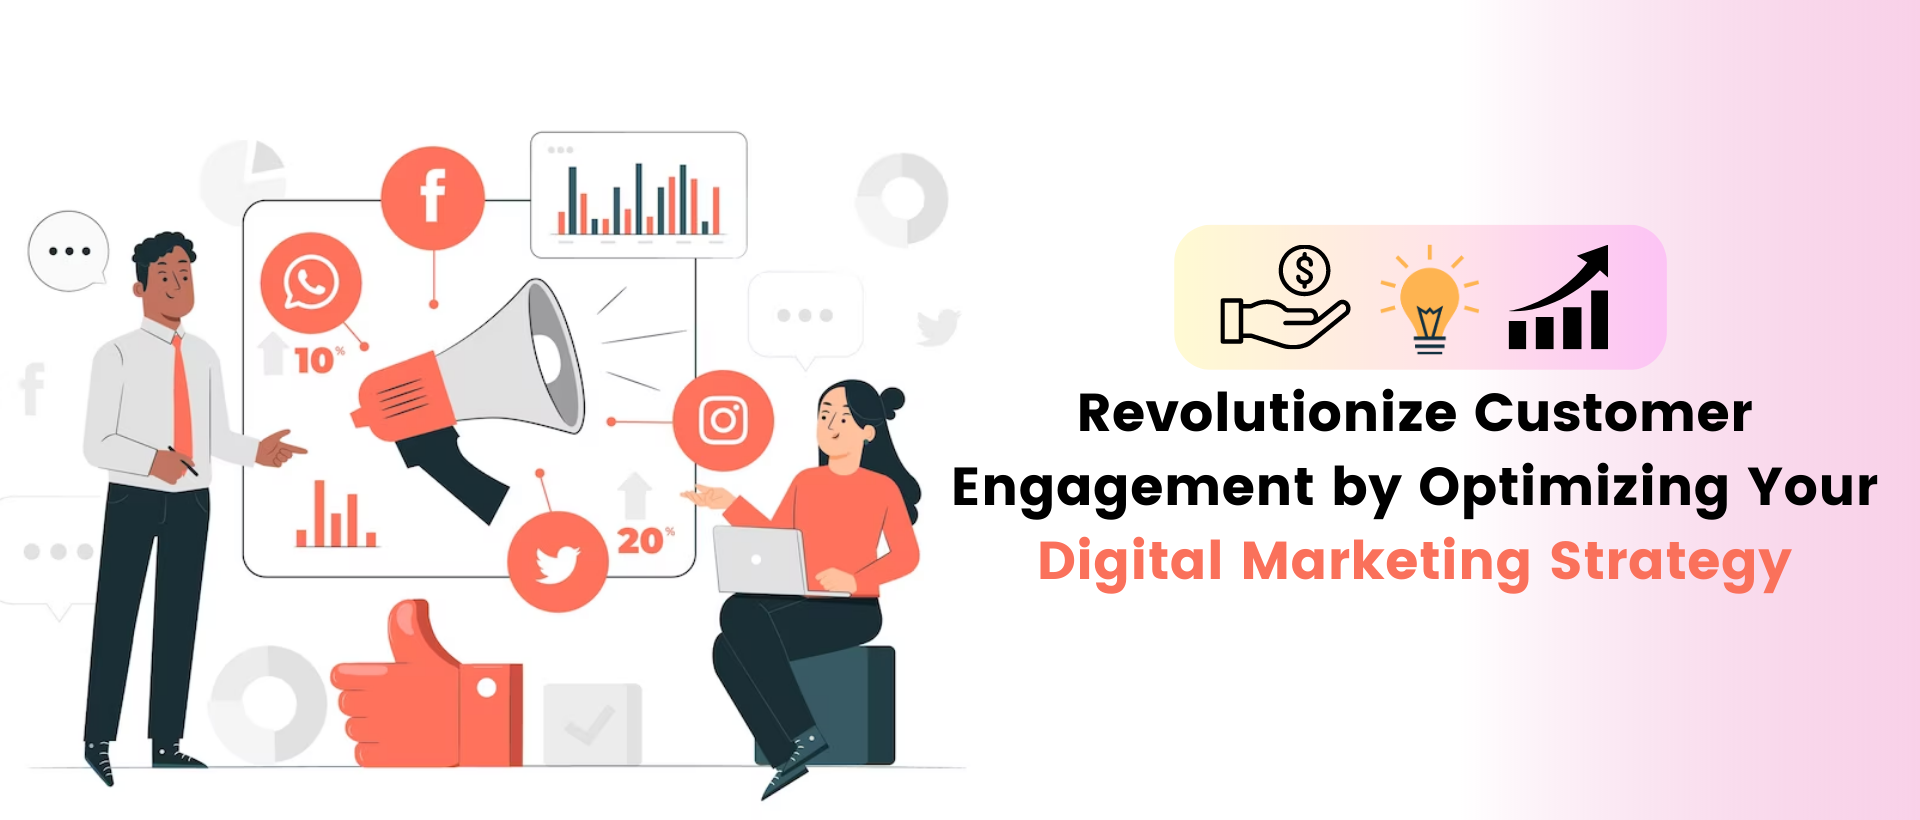 Revolutionize Customer Engagement by Optimizing Your Digital Marketing Strategy